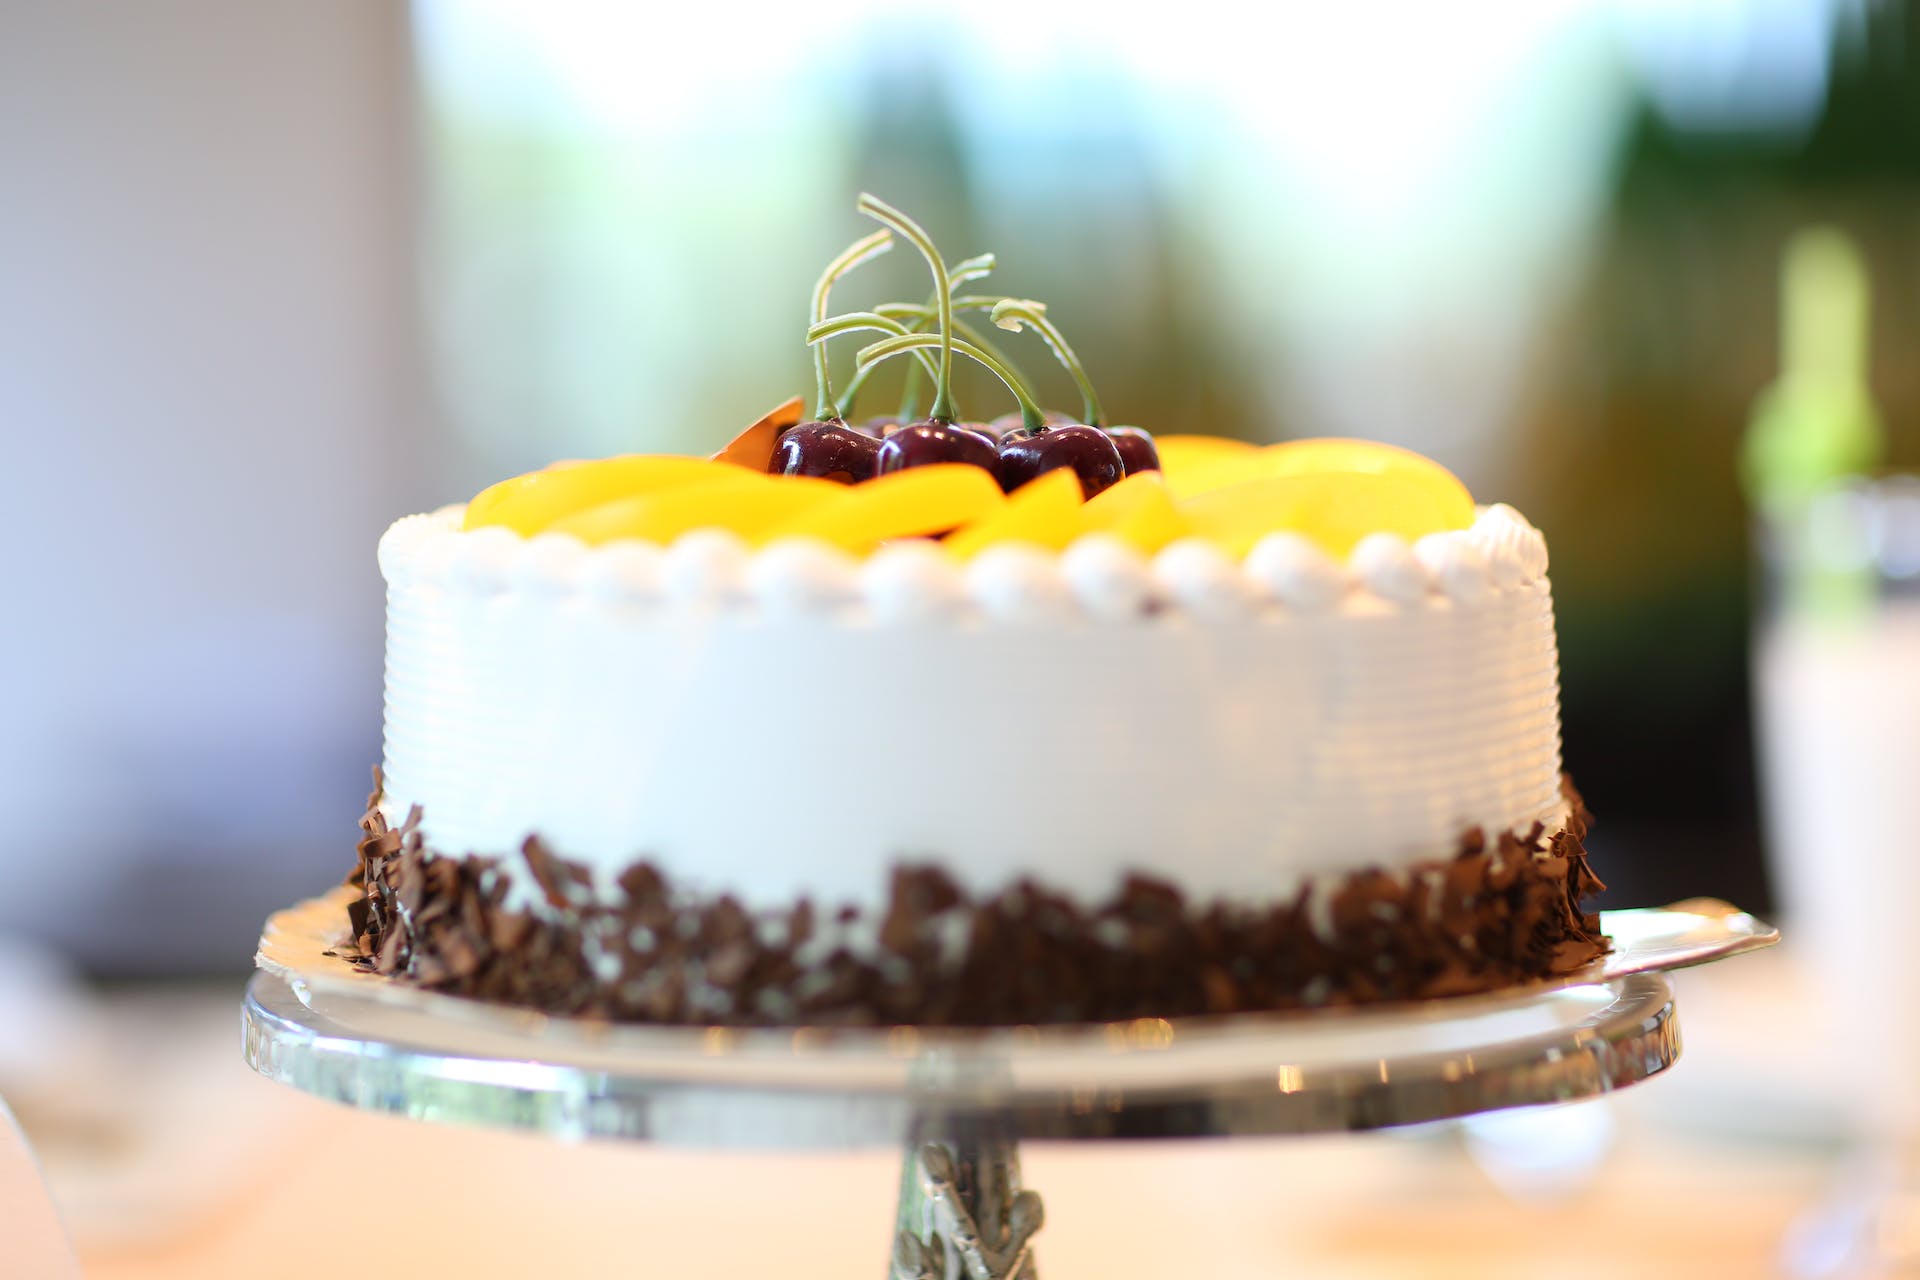 Gâteau garni de fruits | Source : Pexels